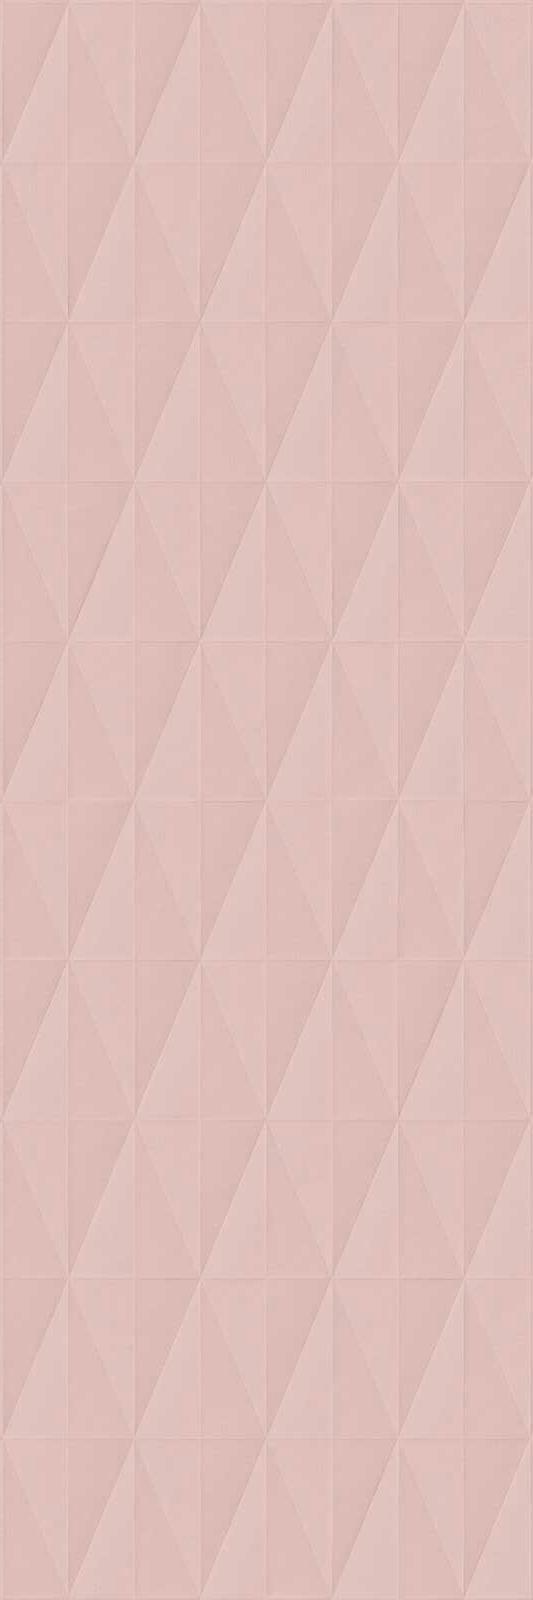 Керамическая плитка для стен Marazzi Eclettica 40x120 розовый (M1A7) керамическая плитка для стен marazzi eclettica 40x120 красный m19k